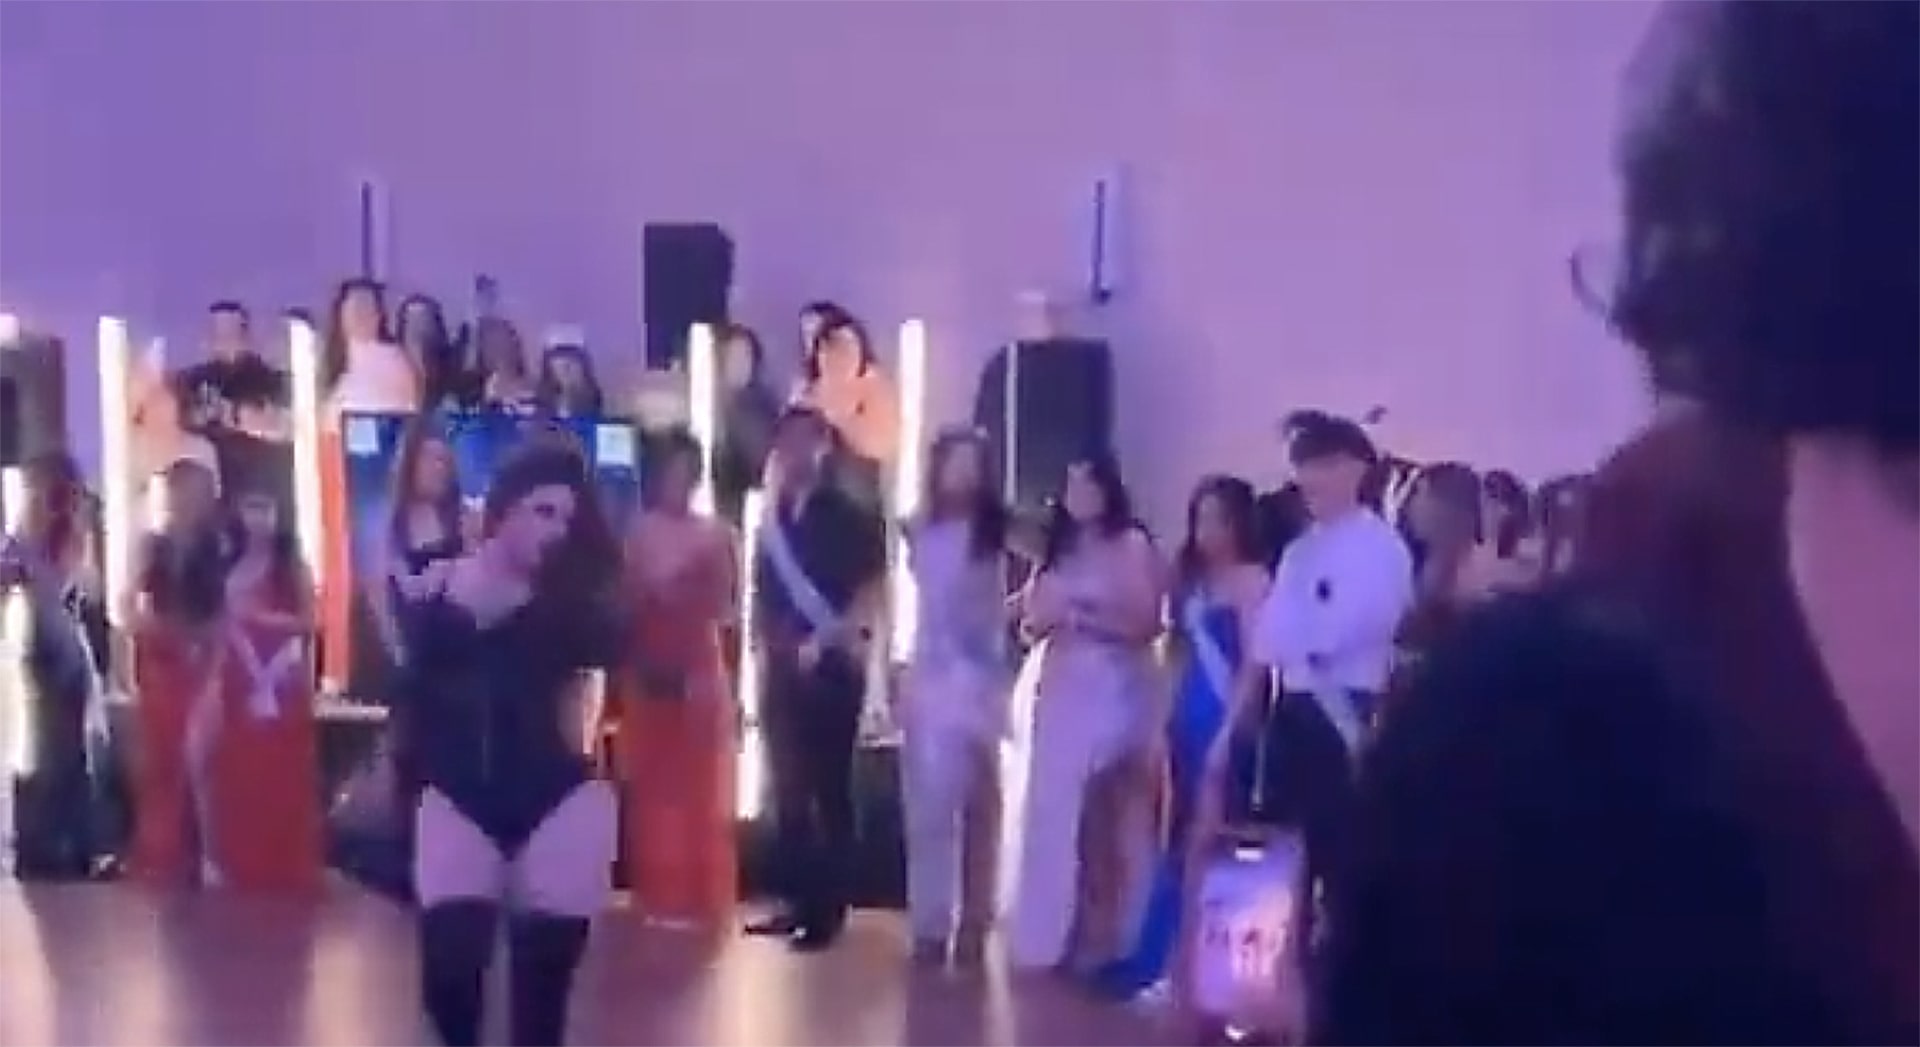 ABQ school hosts ‘drag queen stripper’ performance at prom